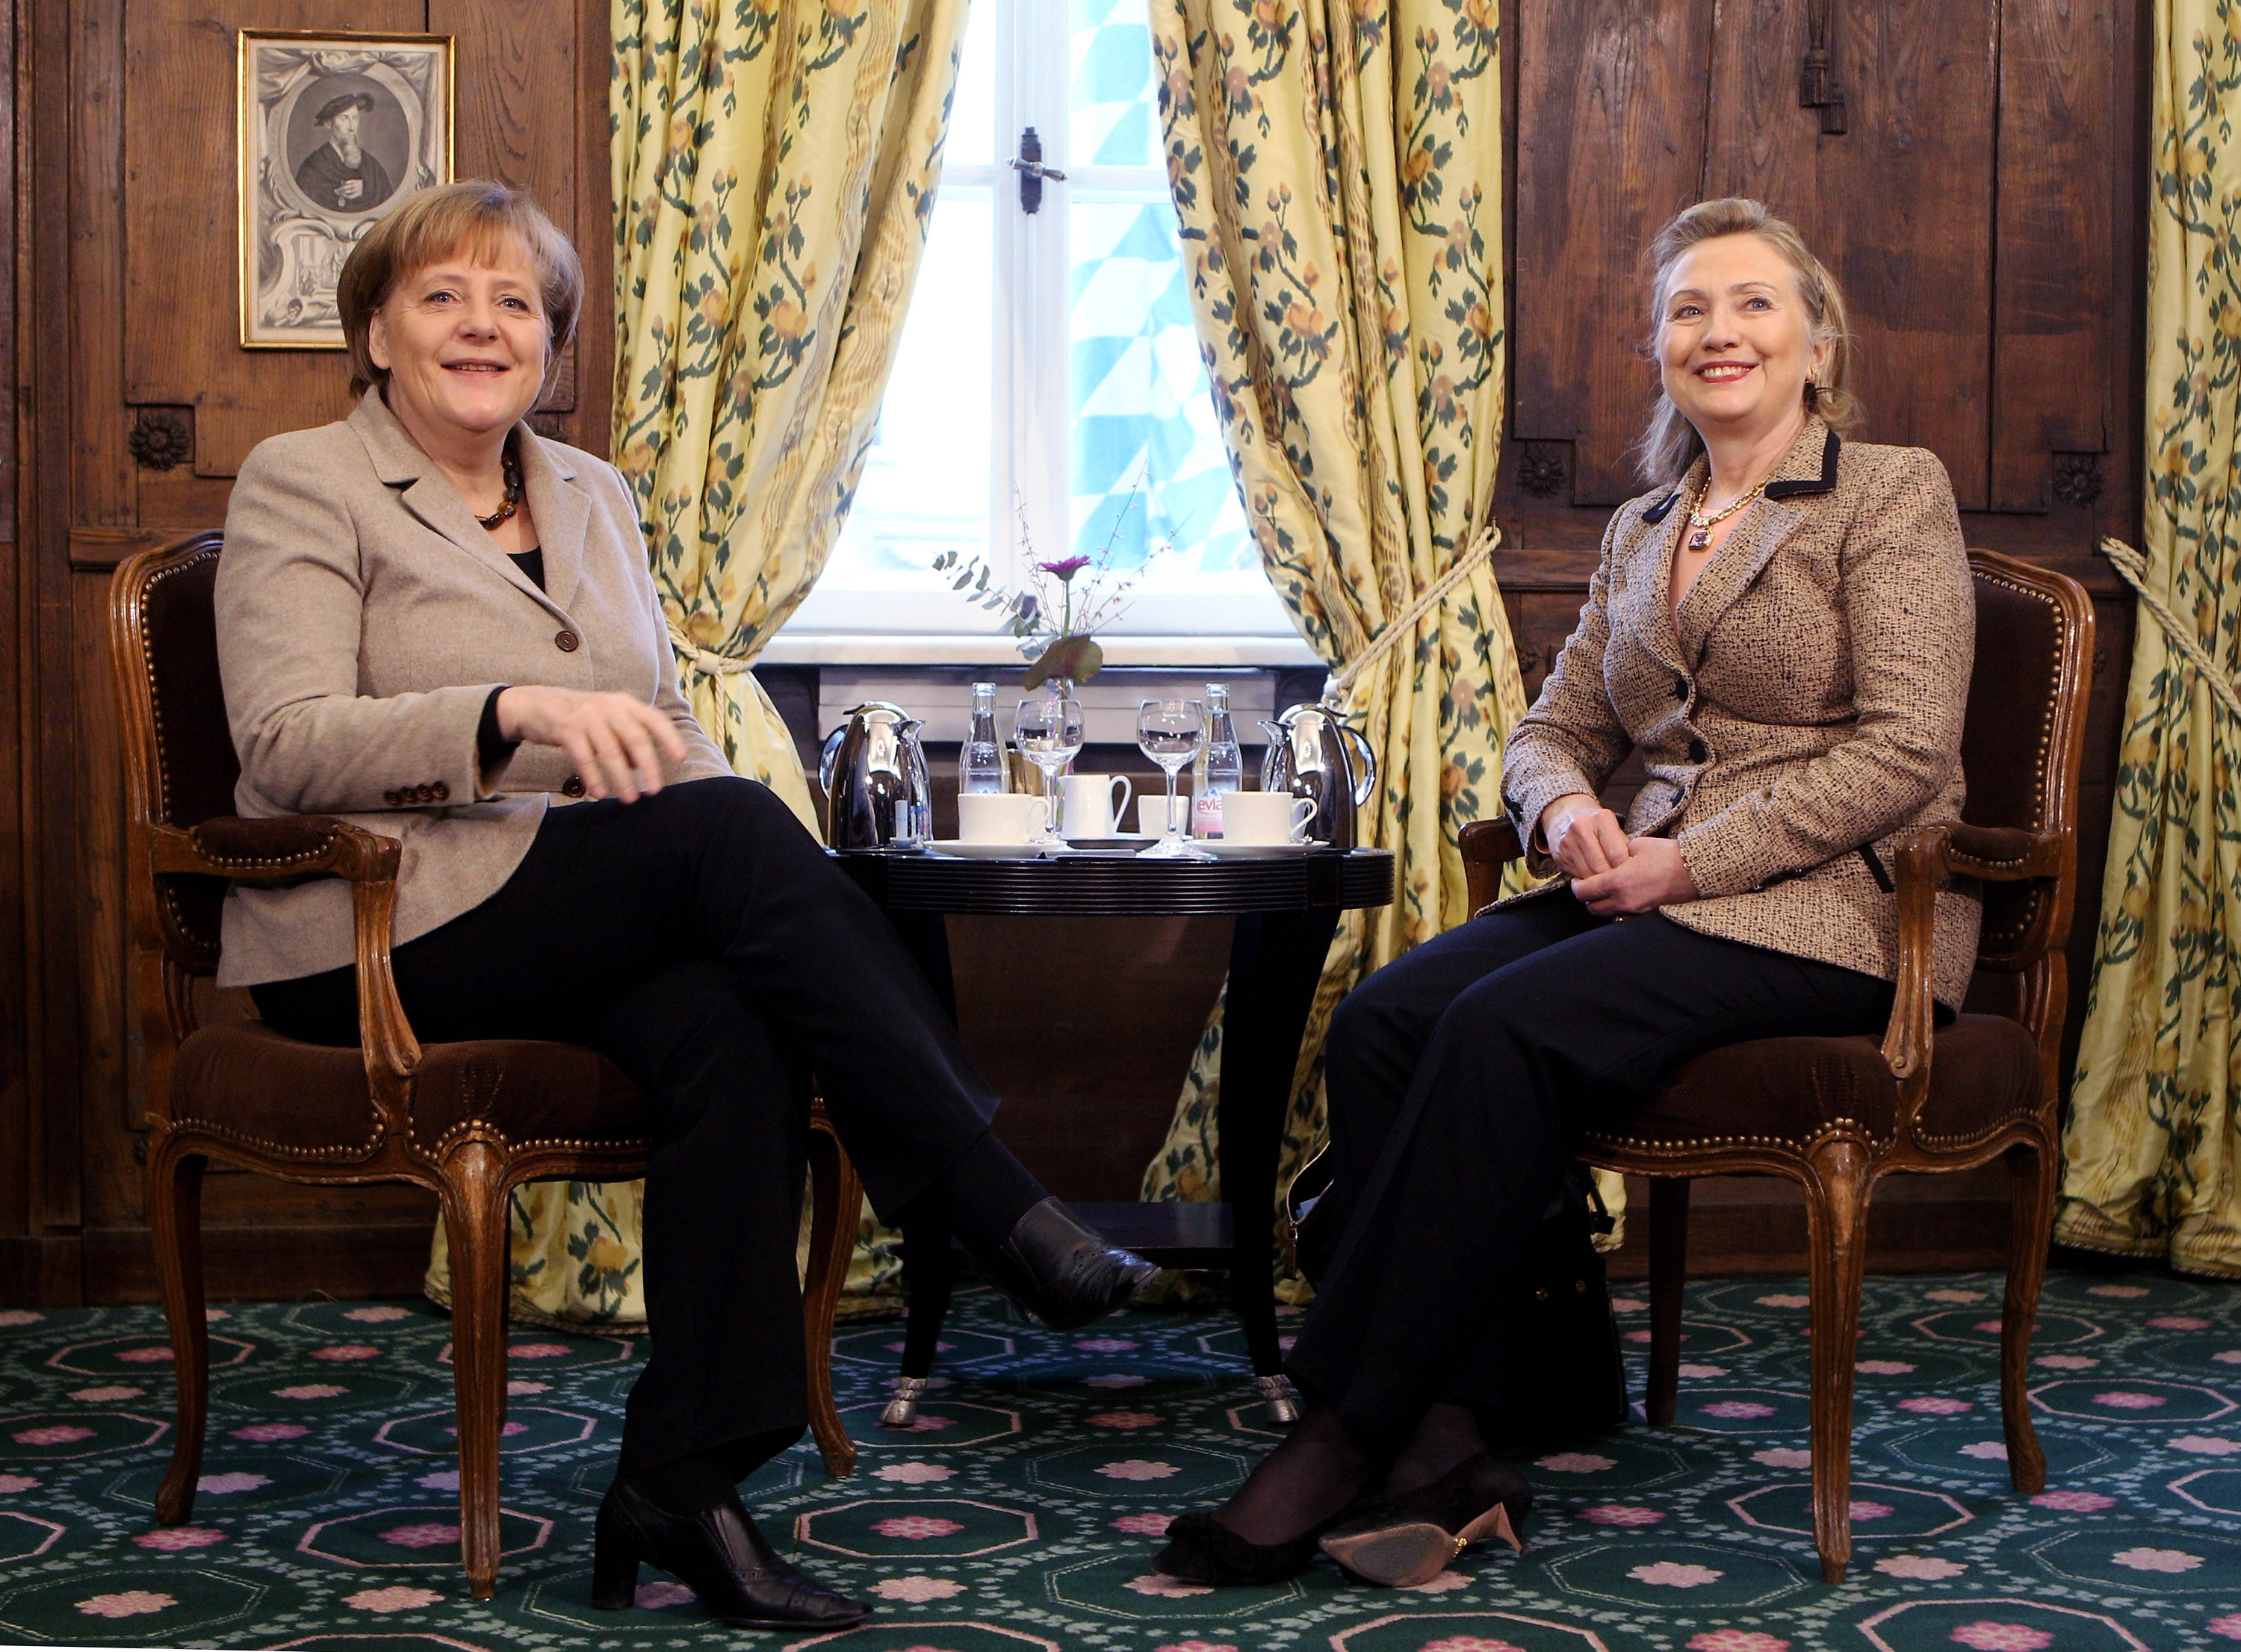 Hillary Clinton and Angela Merkel speak during the Munich Security Conference at Hotel Bayerischer Hof in Munich in 2011.